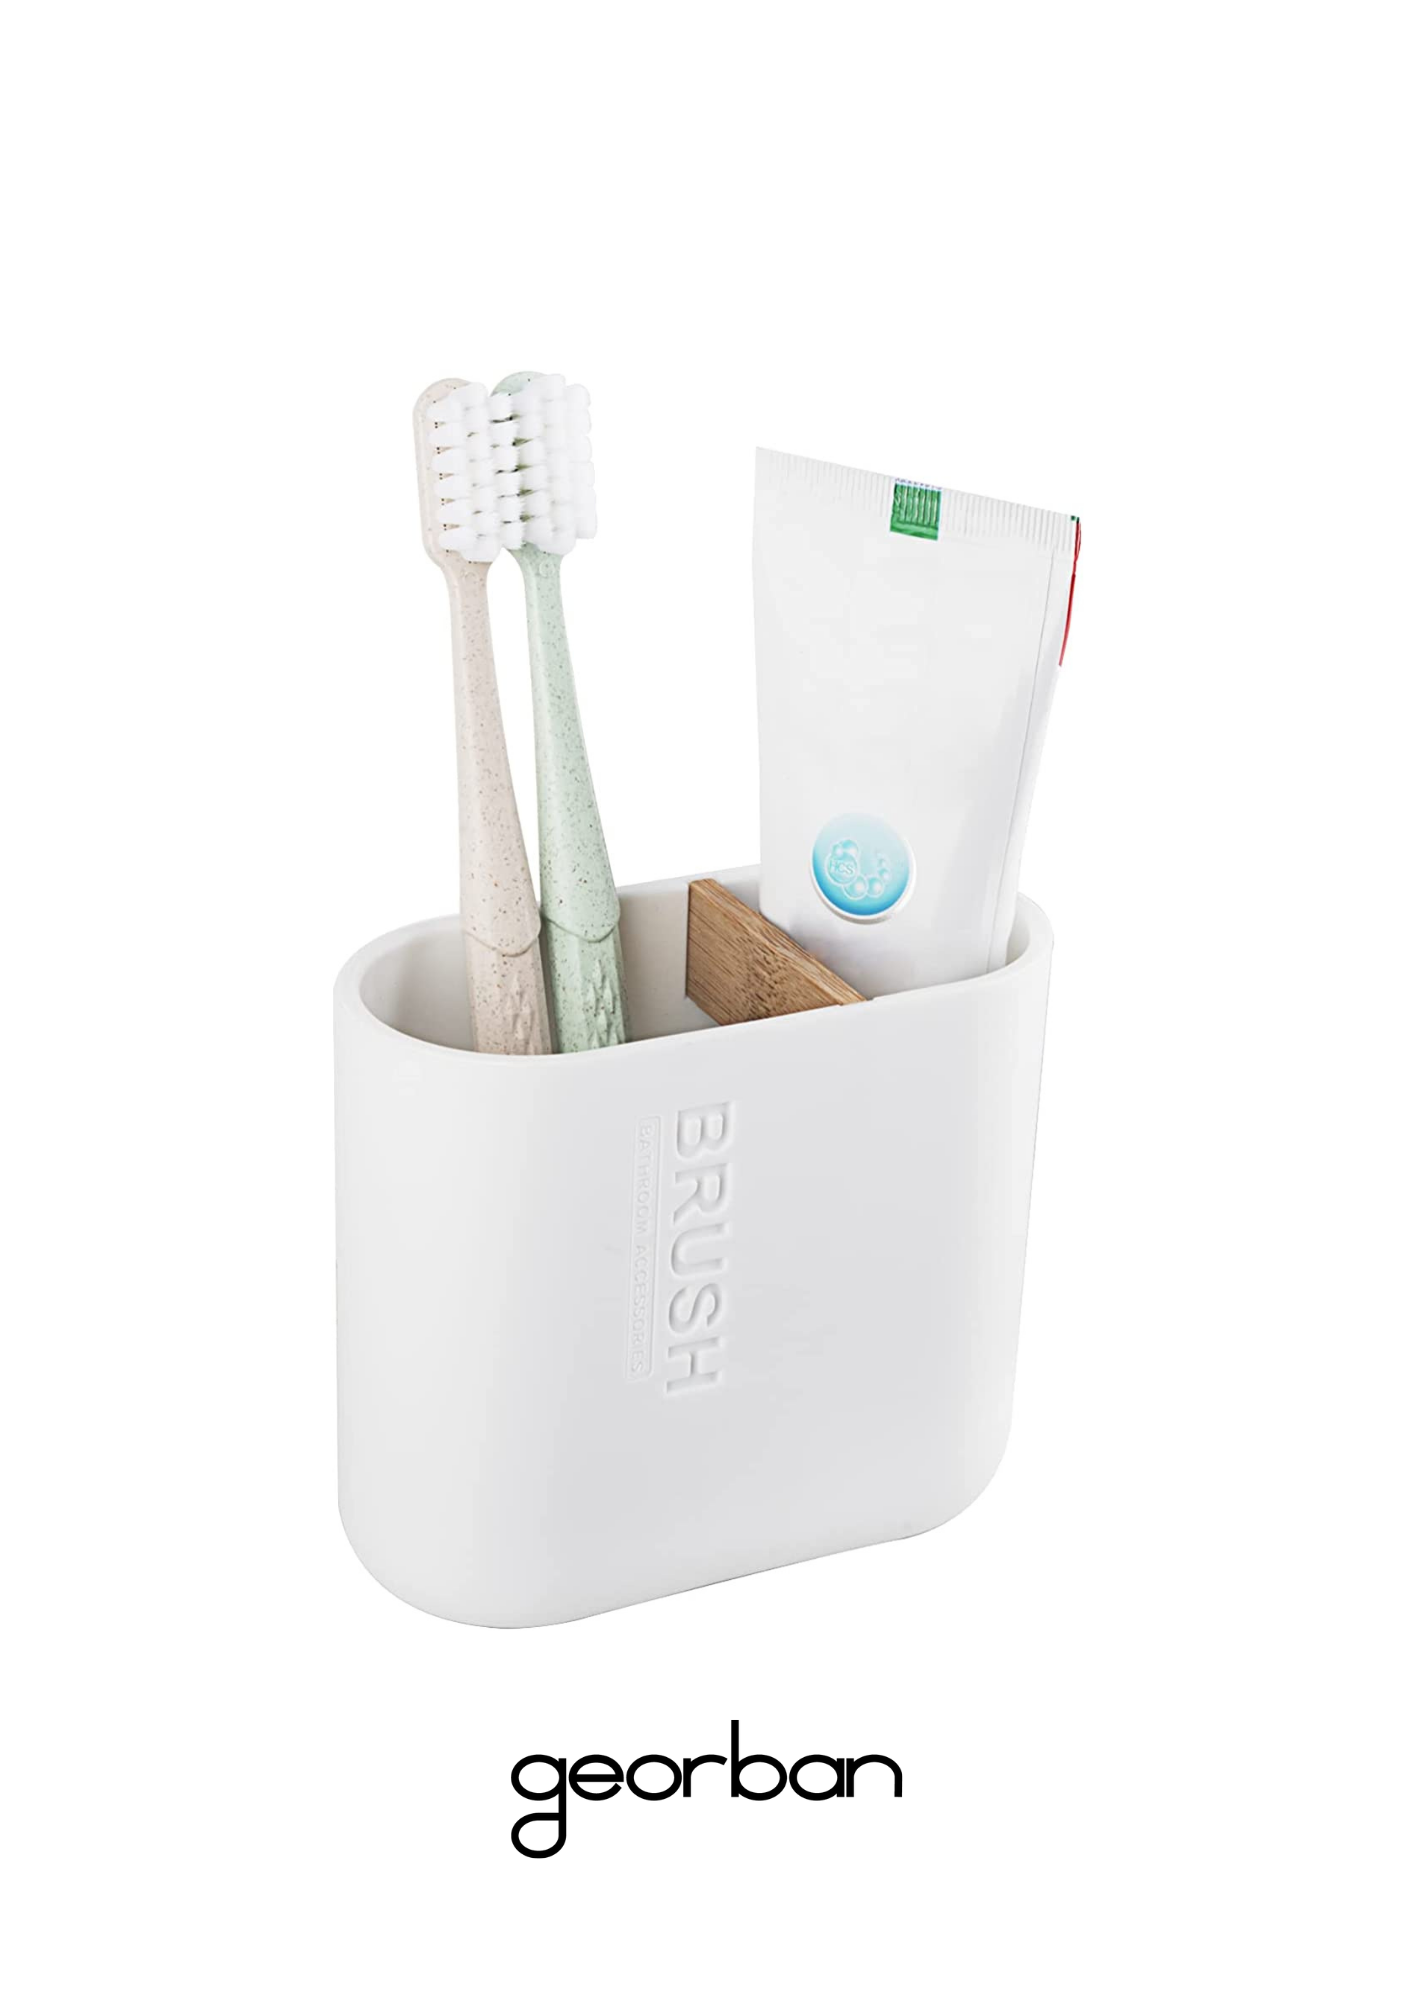 Guinness Remisión Paine Gillic Soporte para cepillo de dientes / Organizador. Blanco - Madera. 12 cm –  georban